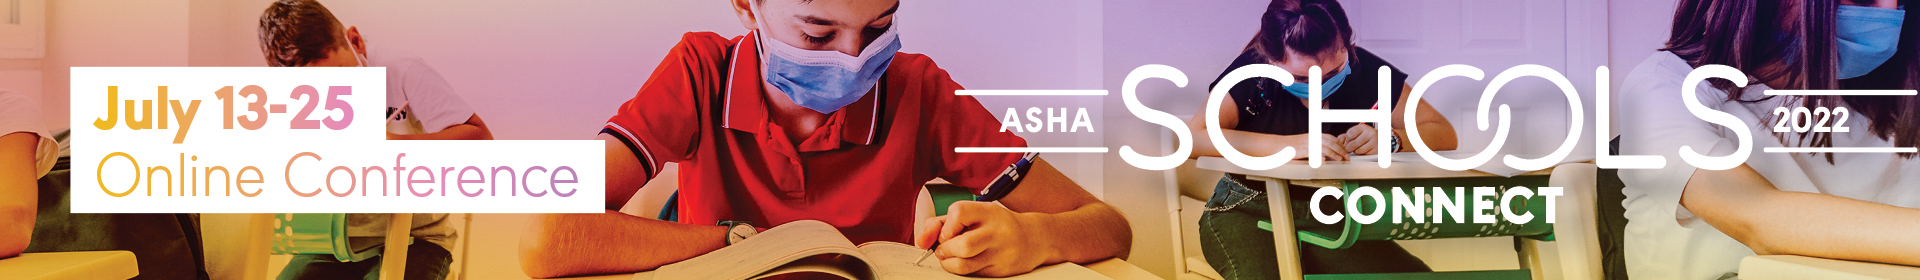 ASHA Schools Connect 2022 Event Banner